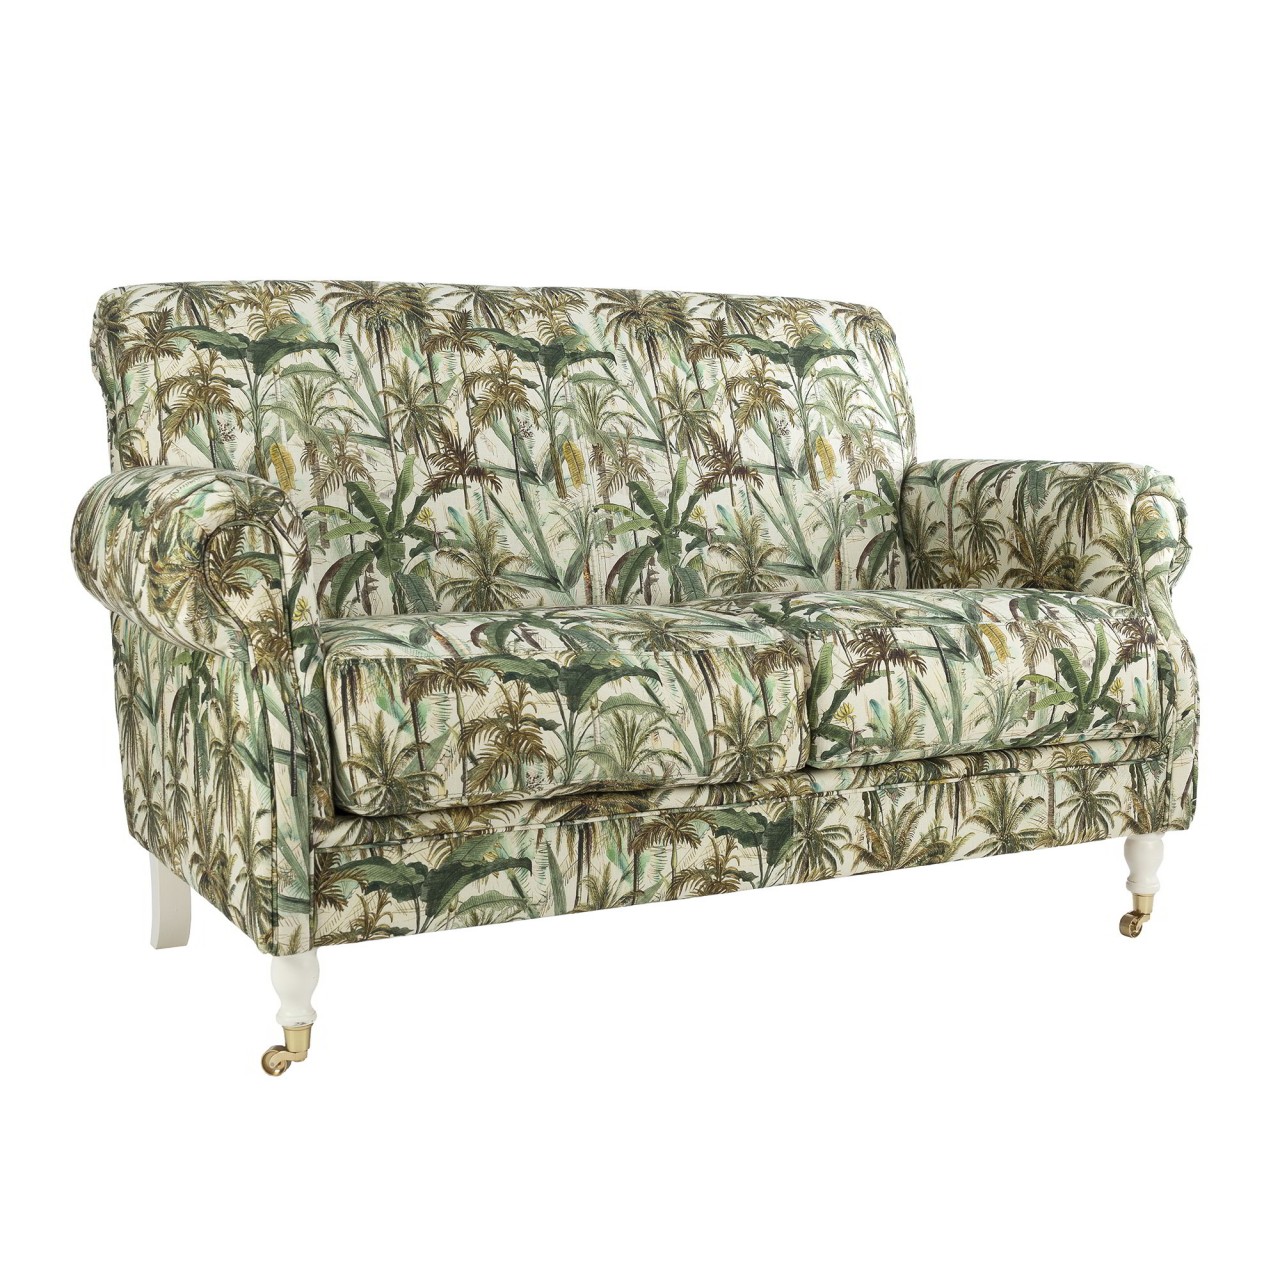 EDINBURGH Sofa - THE JUNGLE Linen